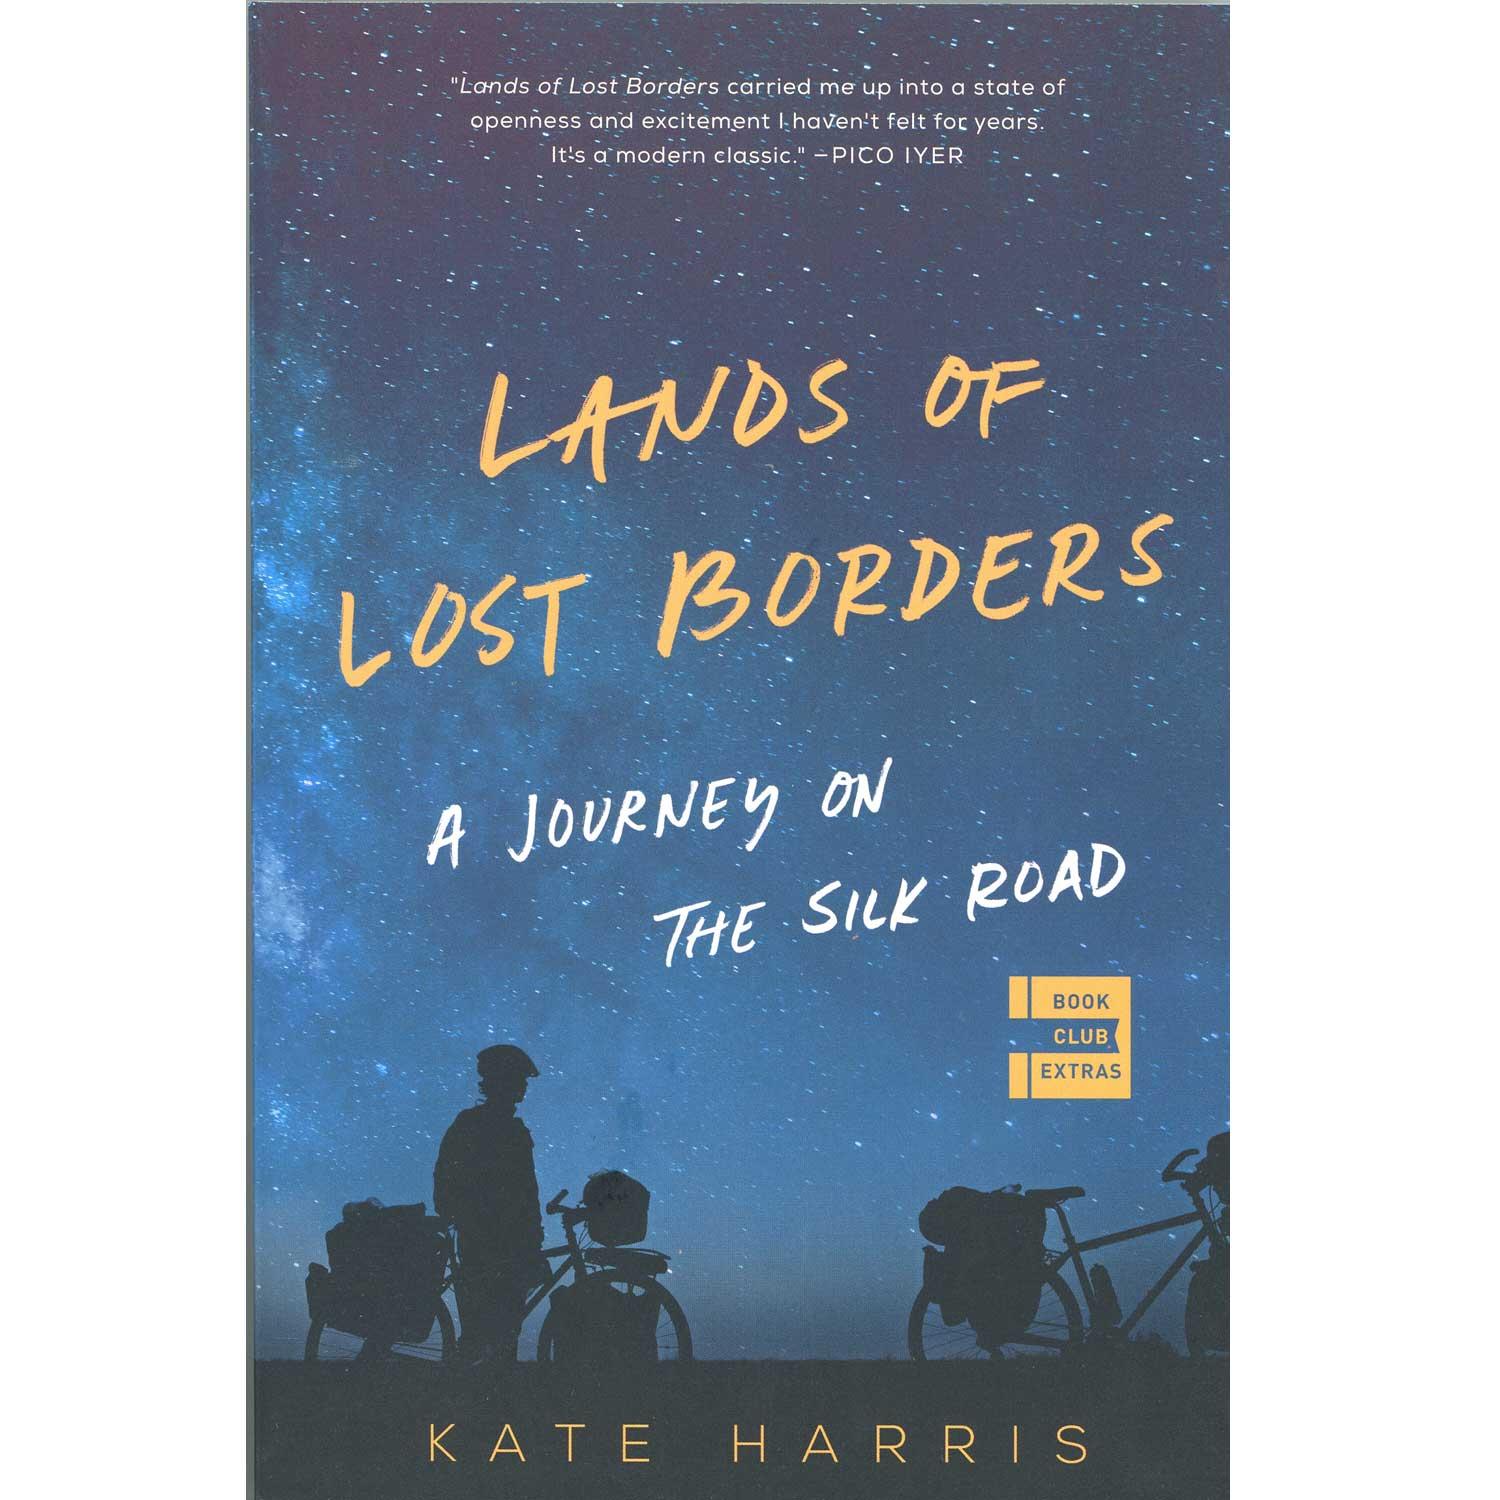 lands of lost borders by kate harris